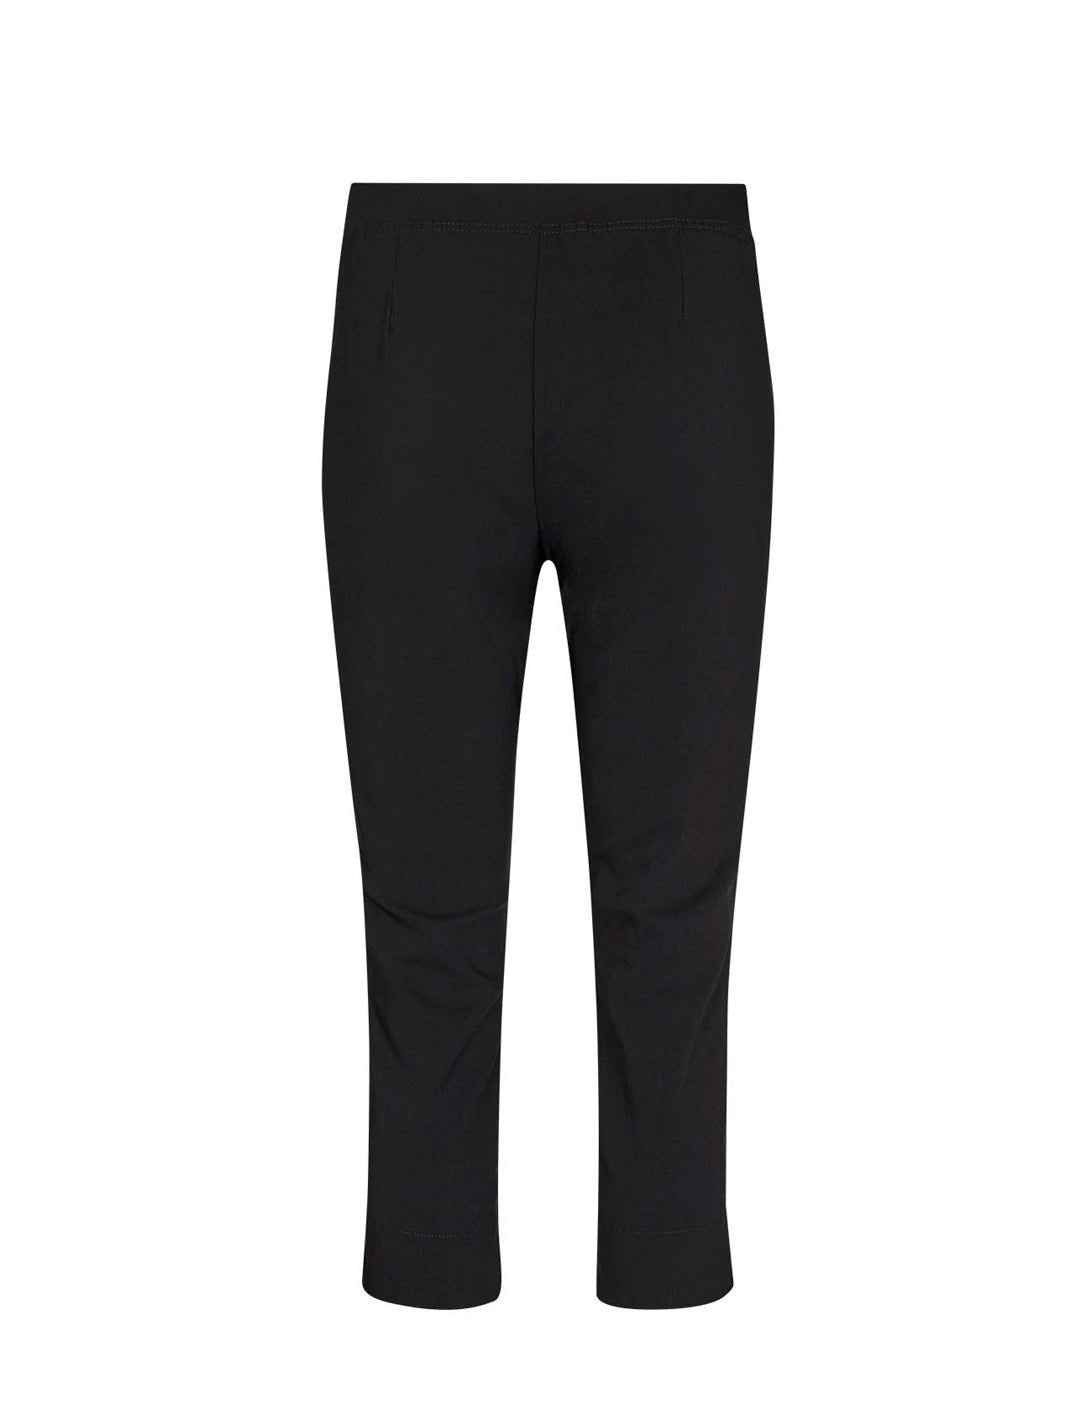 Soya Concept Lilly 26B capri pants black - Online-Mode